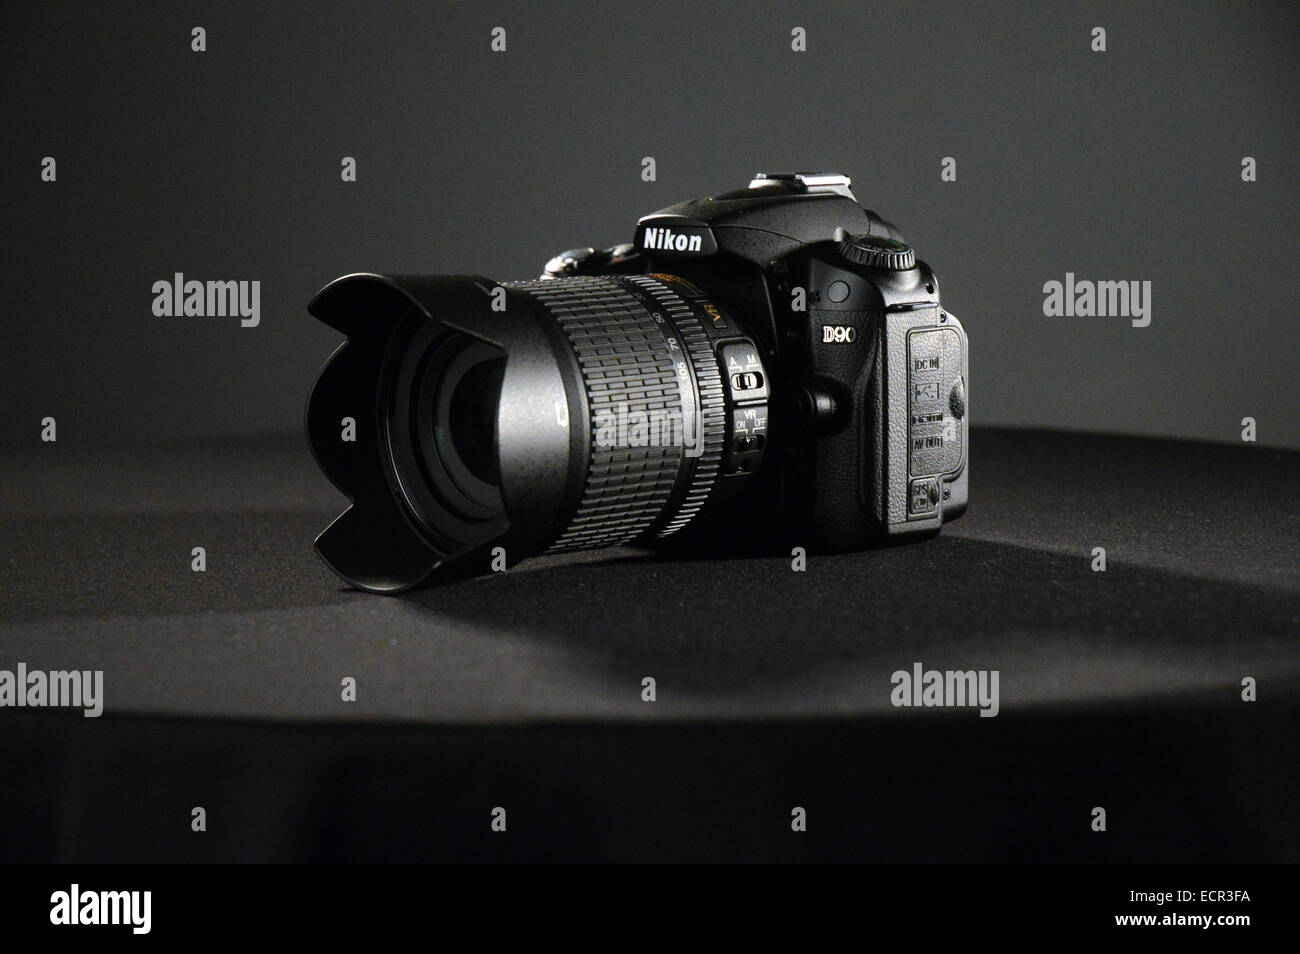 Cameras Nikon D90 on black background Stock Photo